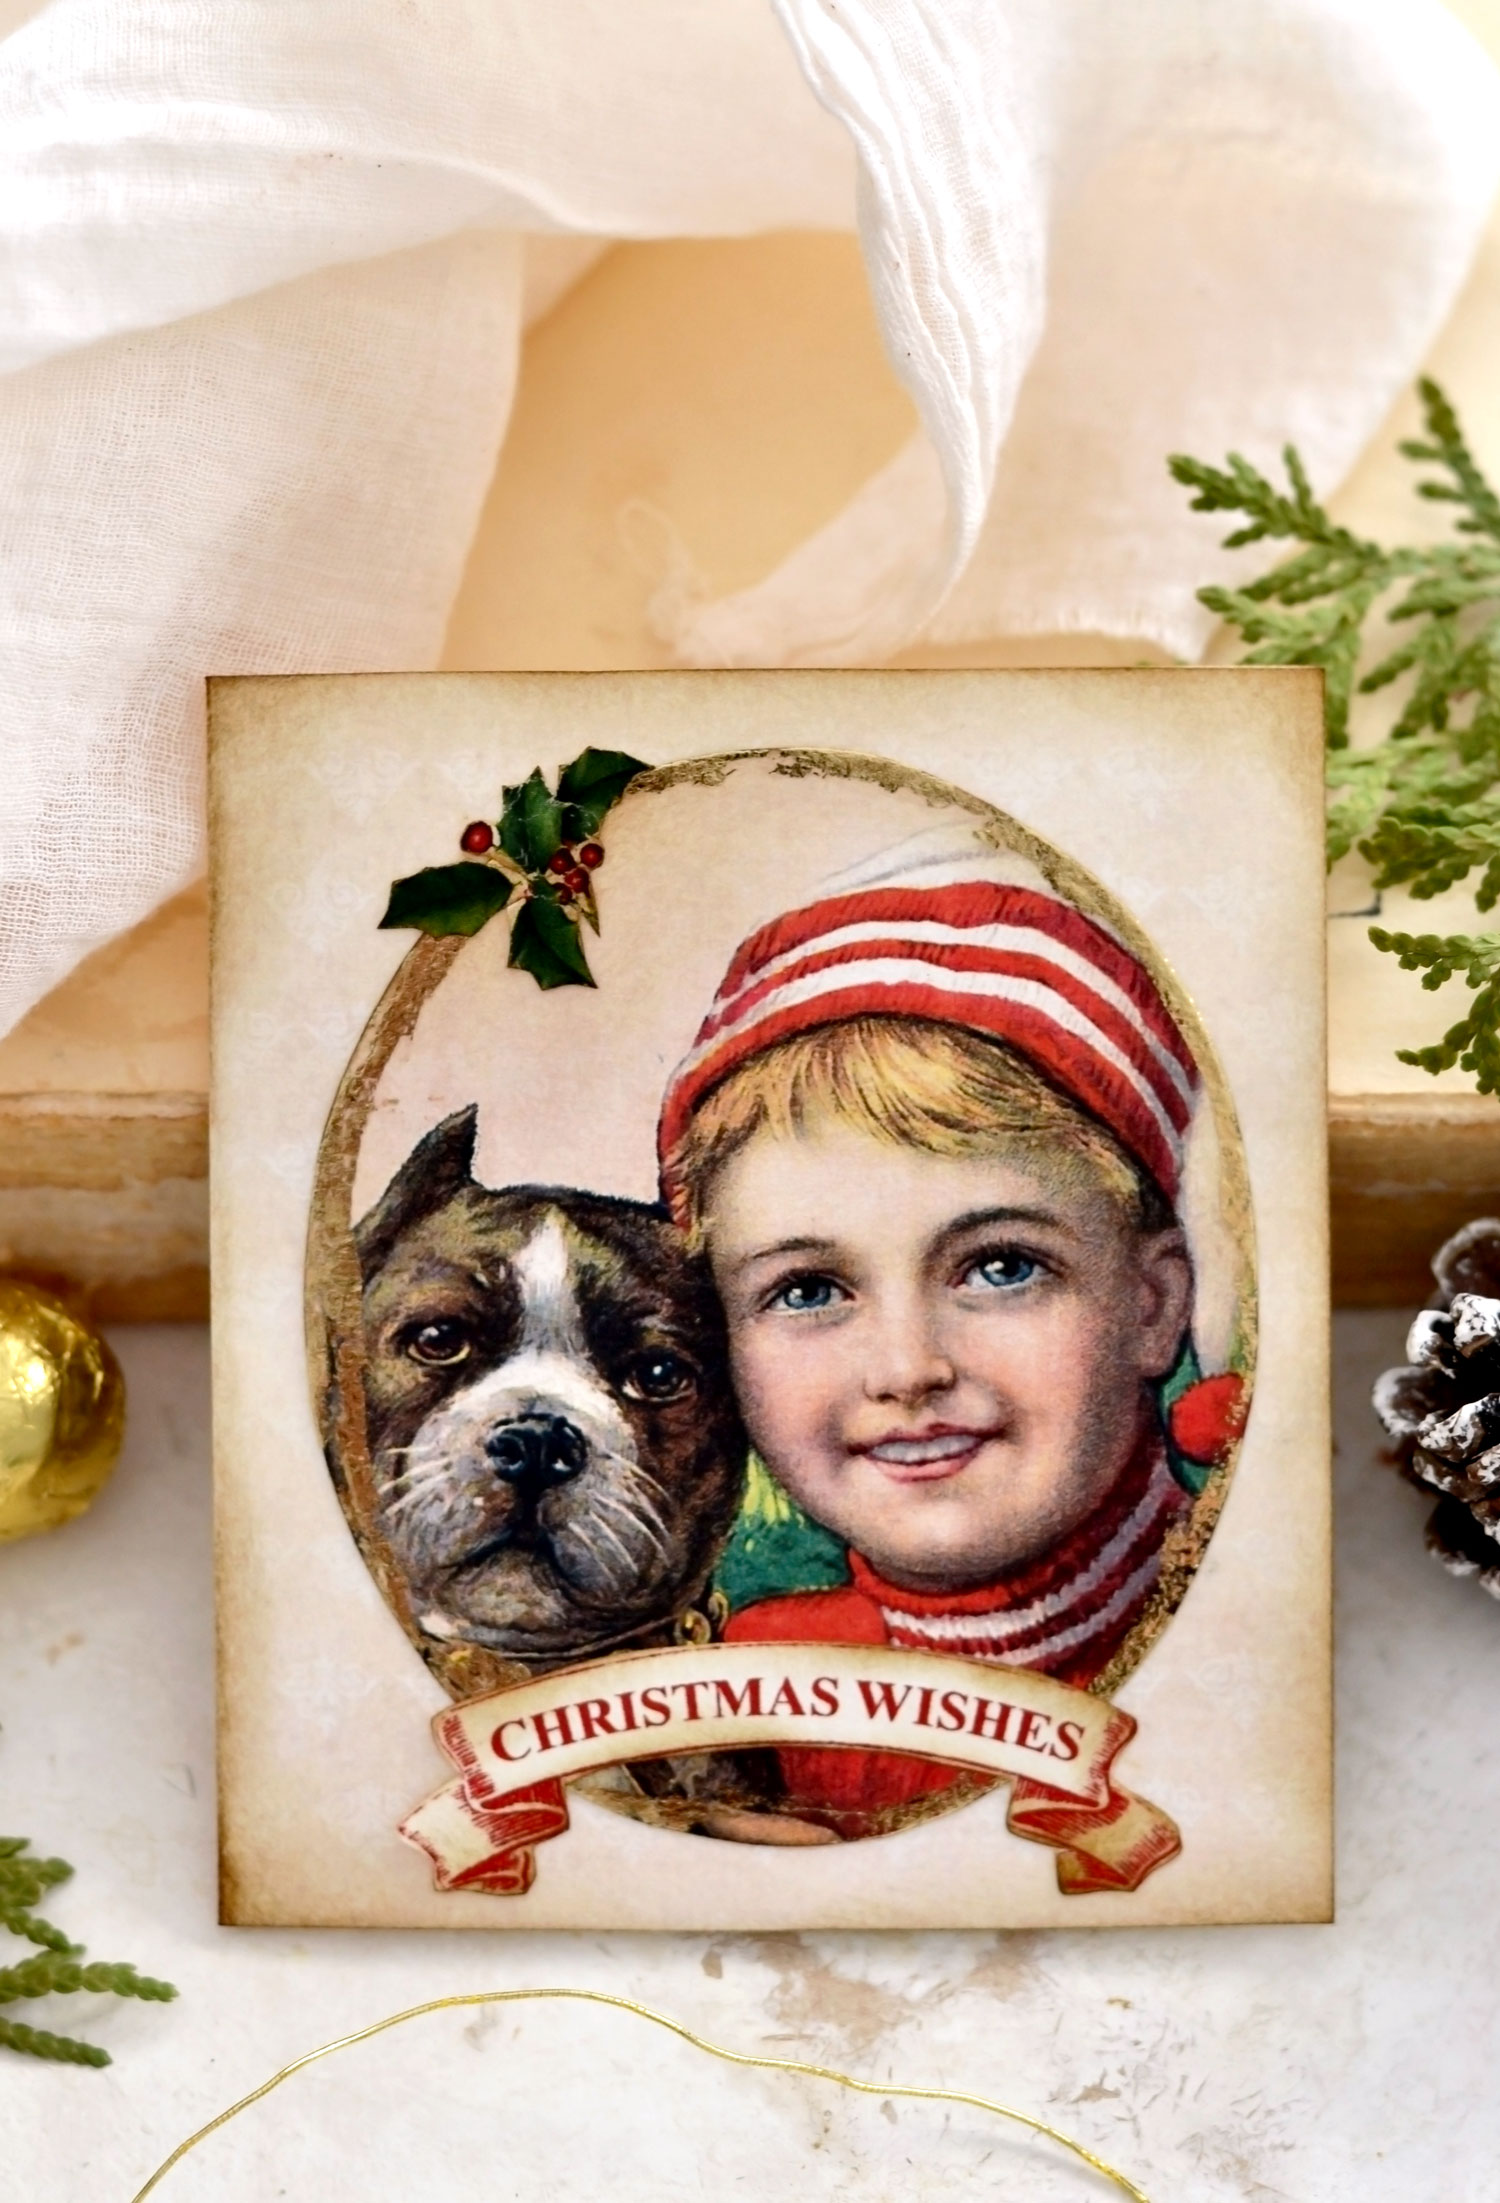 Boy with dog Christmas card